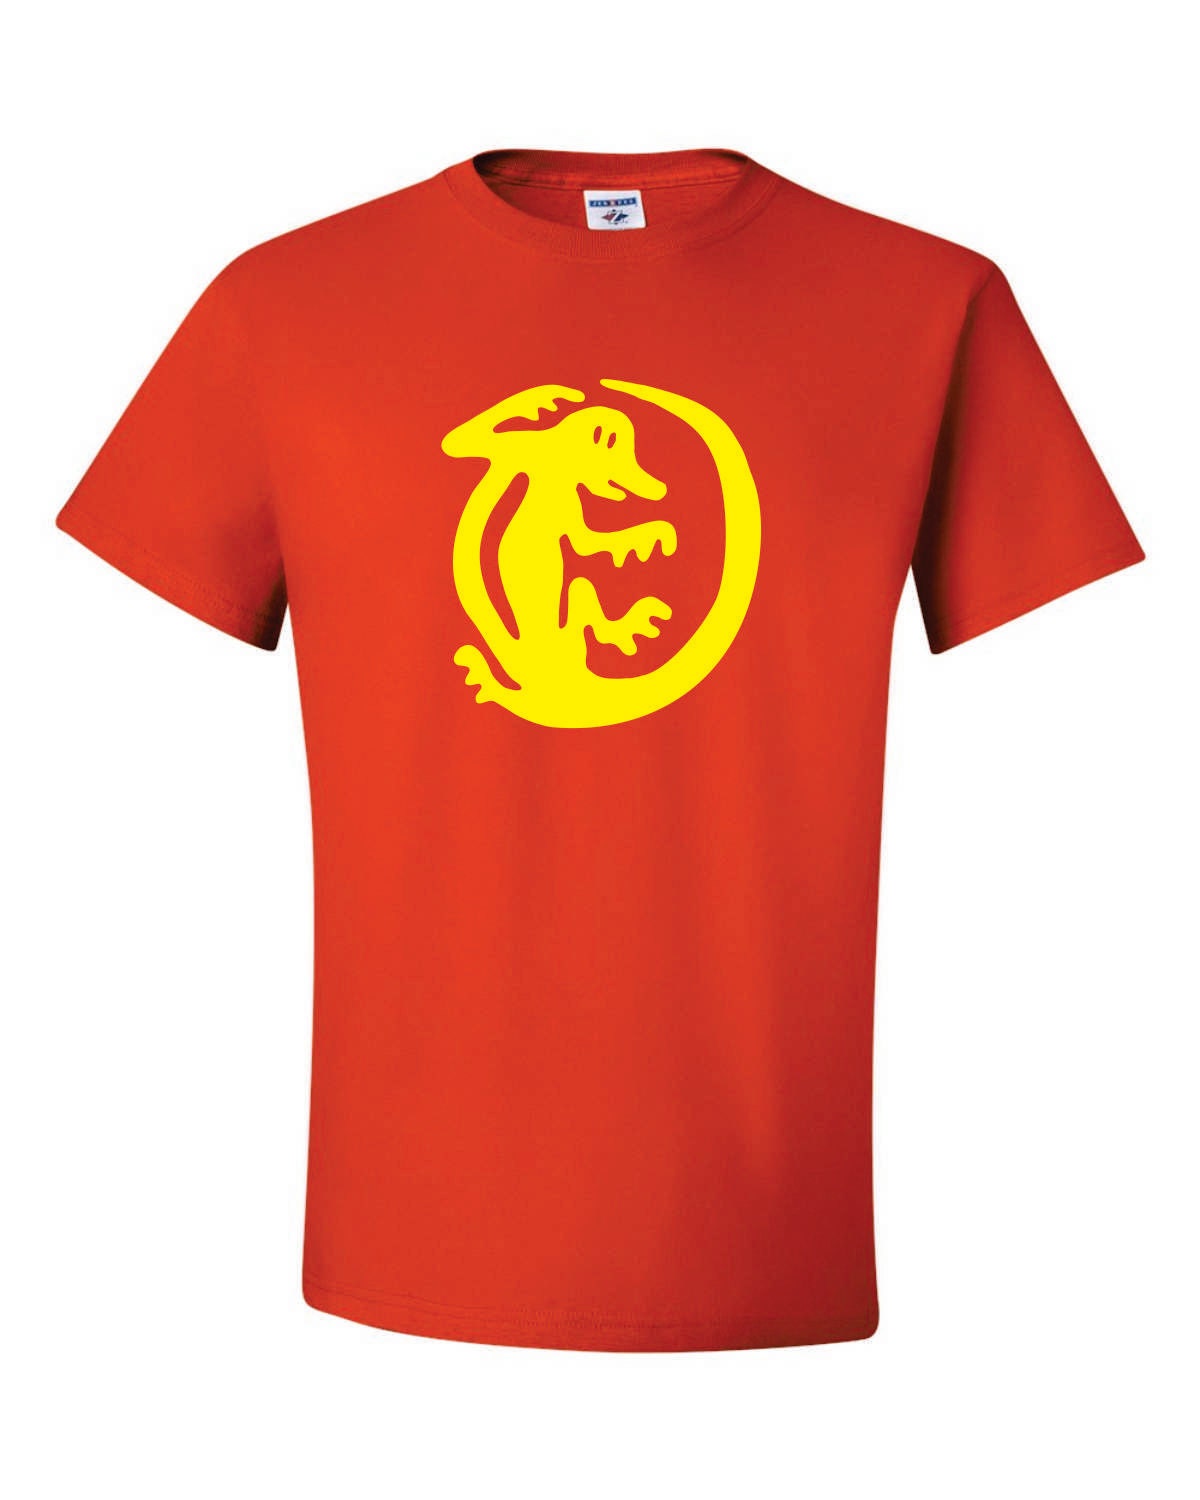 Legends Of The Hidden Temple Orange Iguanas T-Shirt